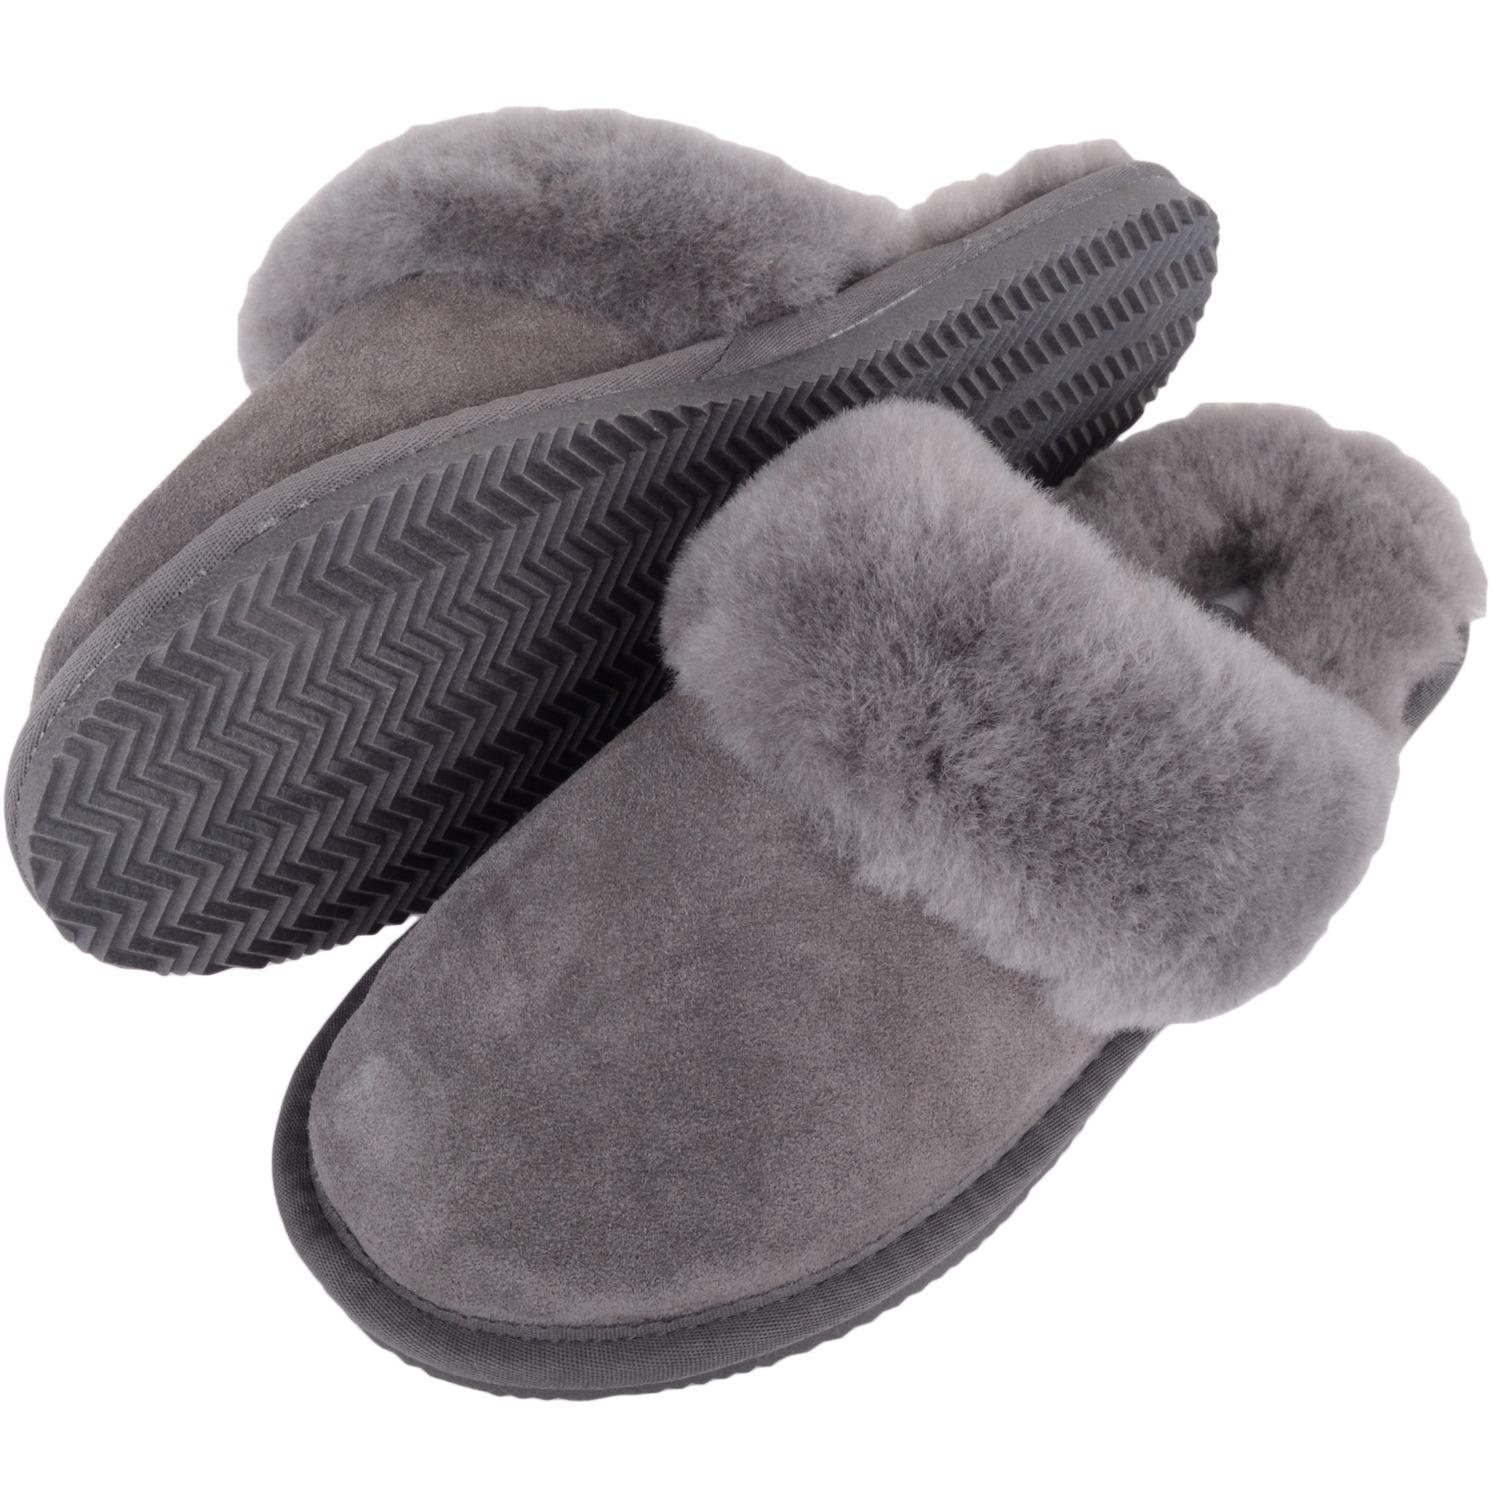 mule slippers uk